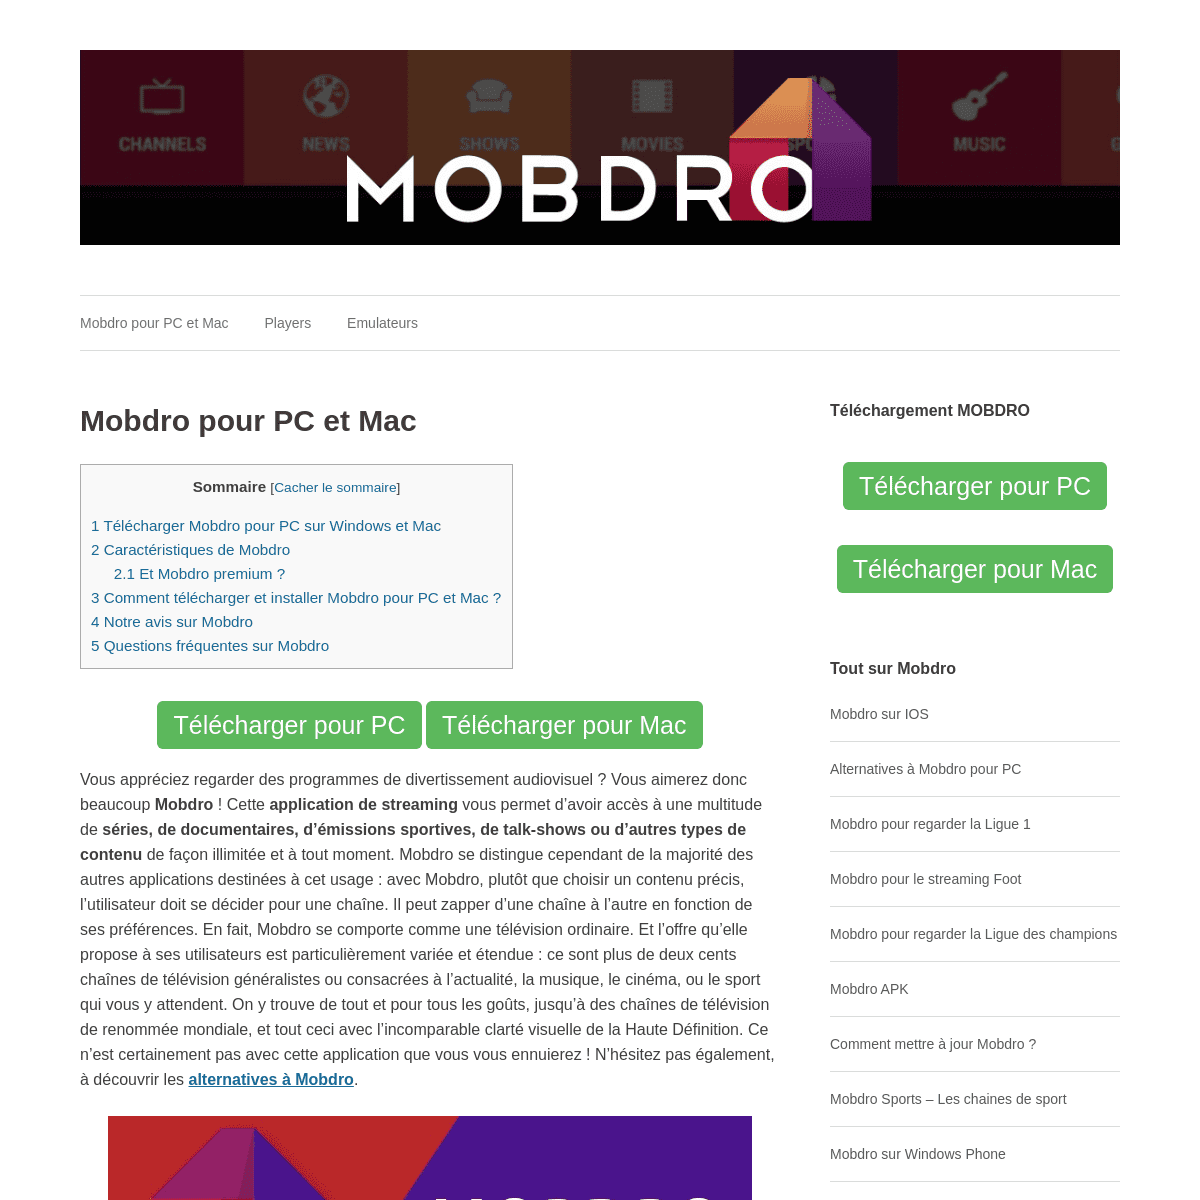 A complete backup of mobdrofr.com